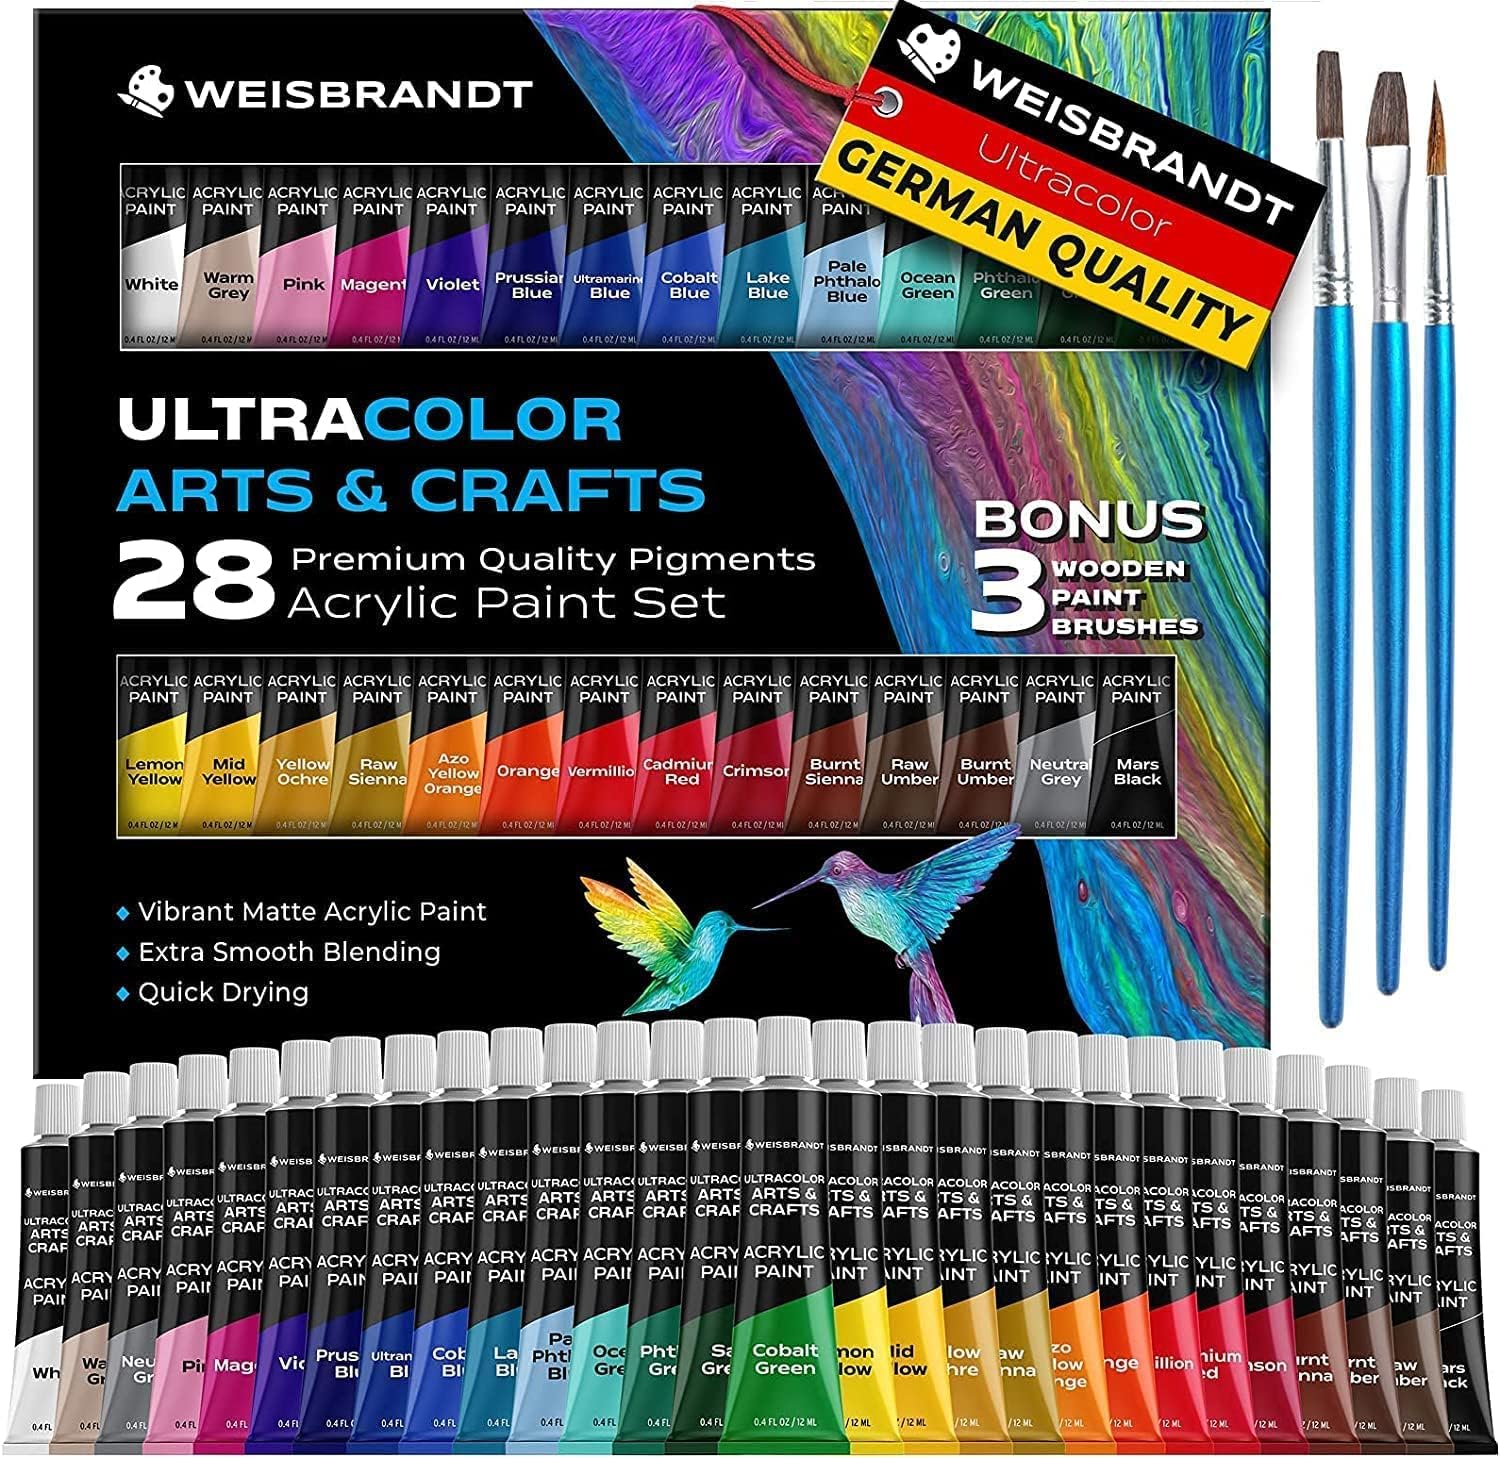 WEISBRANDT Ultra Color Arts & Crafts Acrylic Paint Set [...]